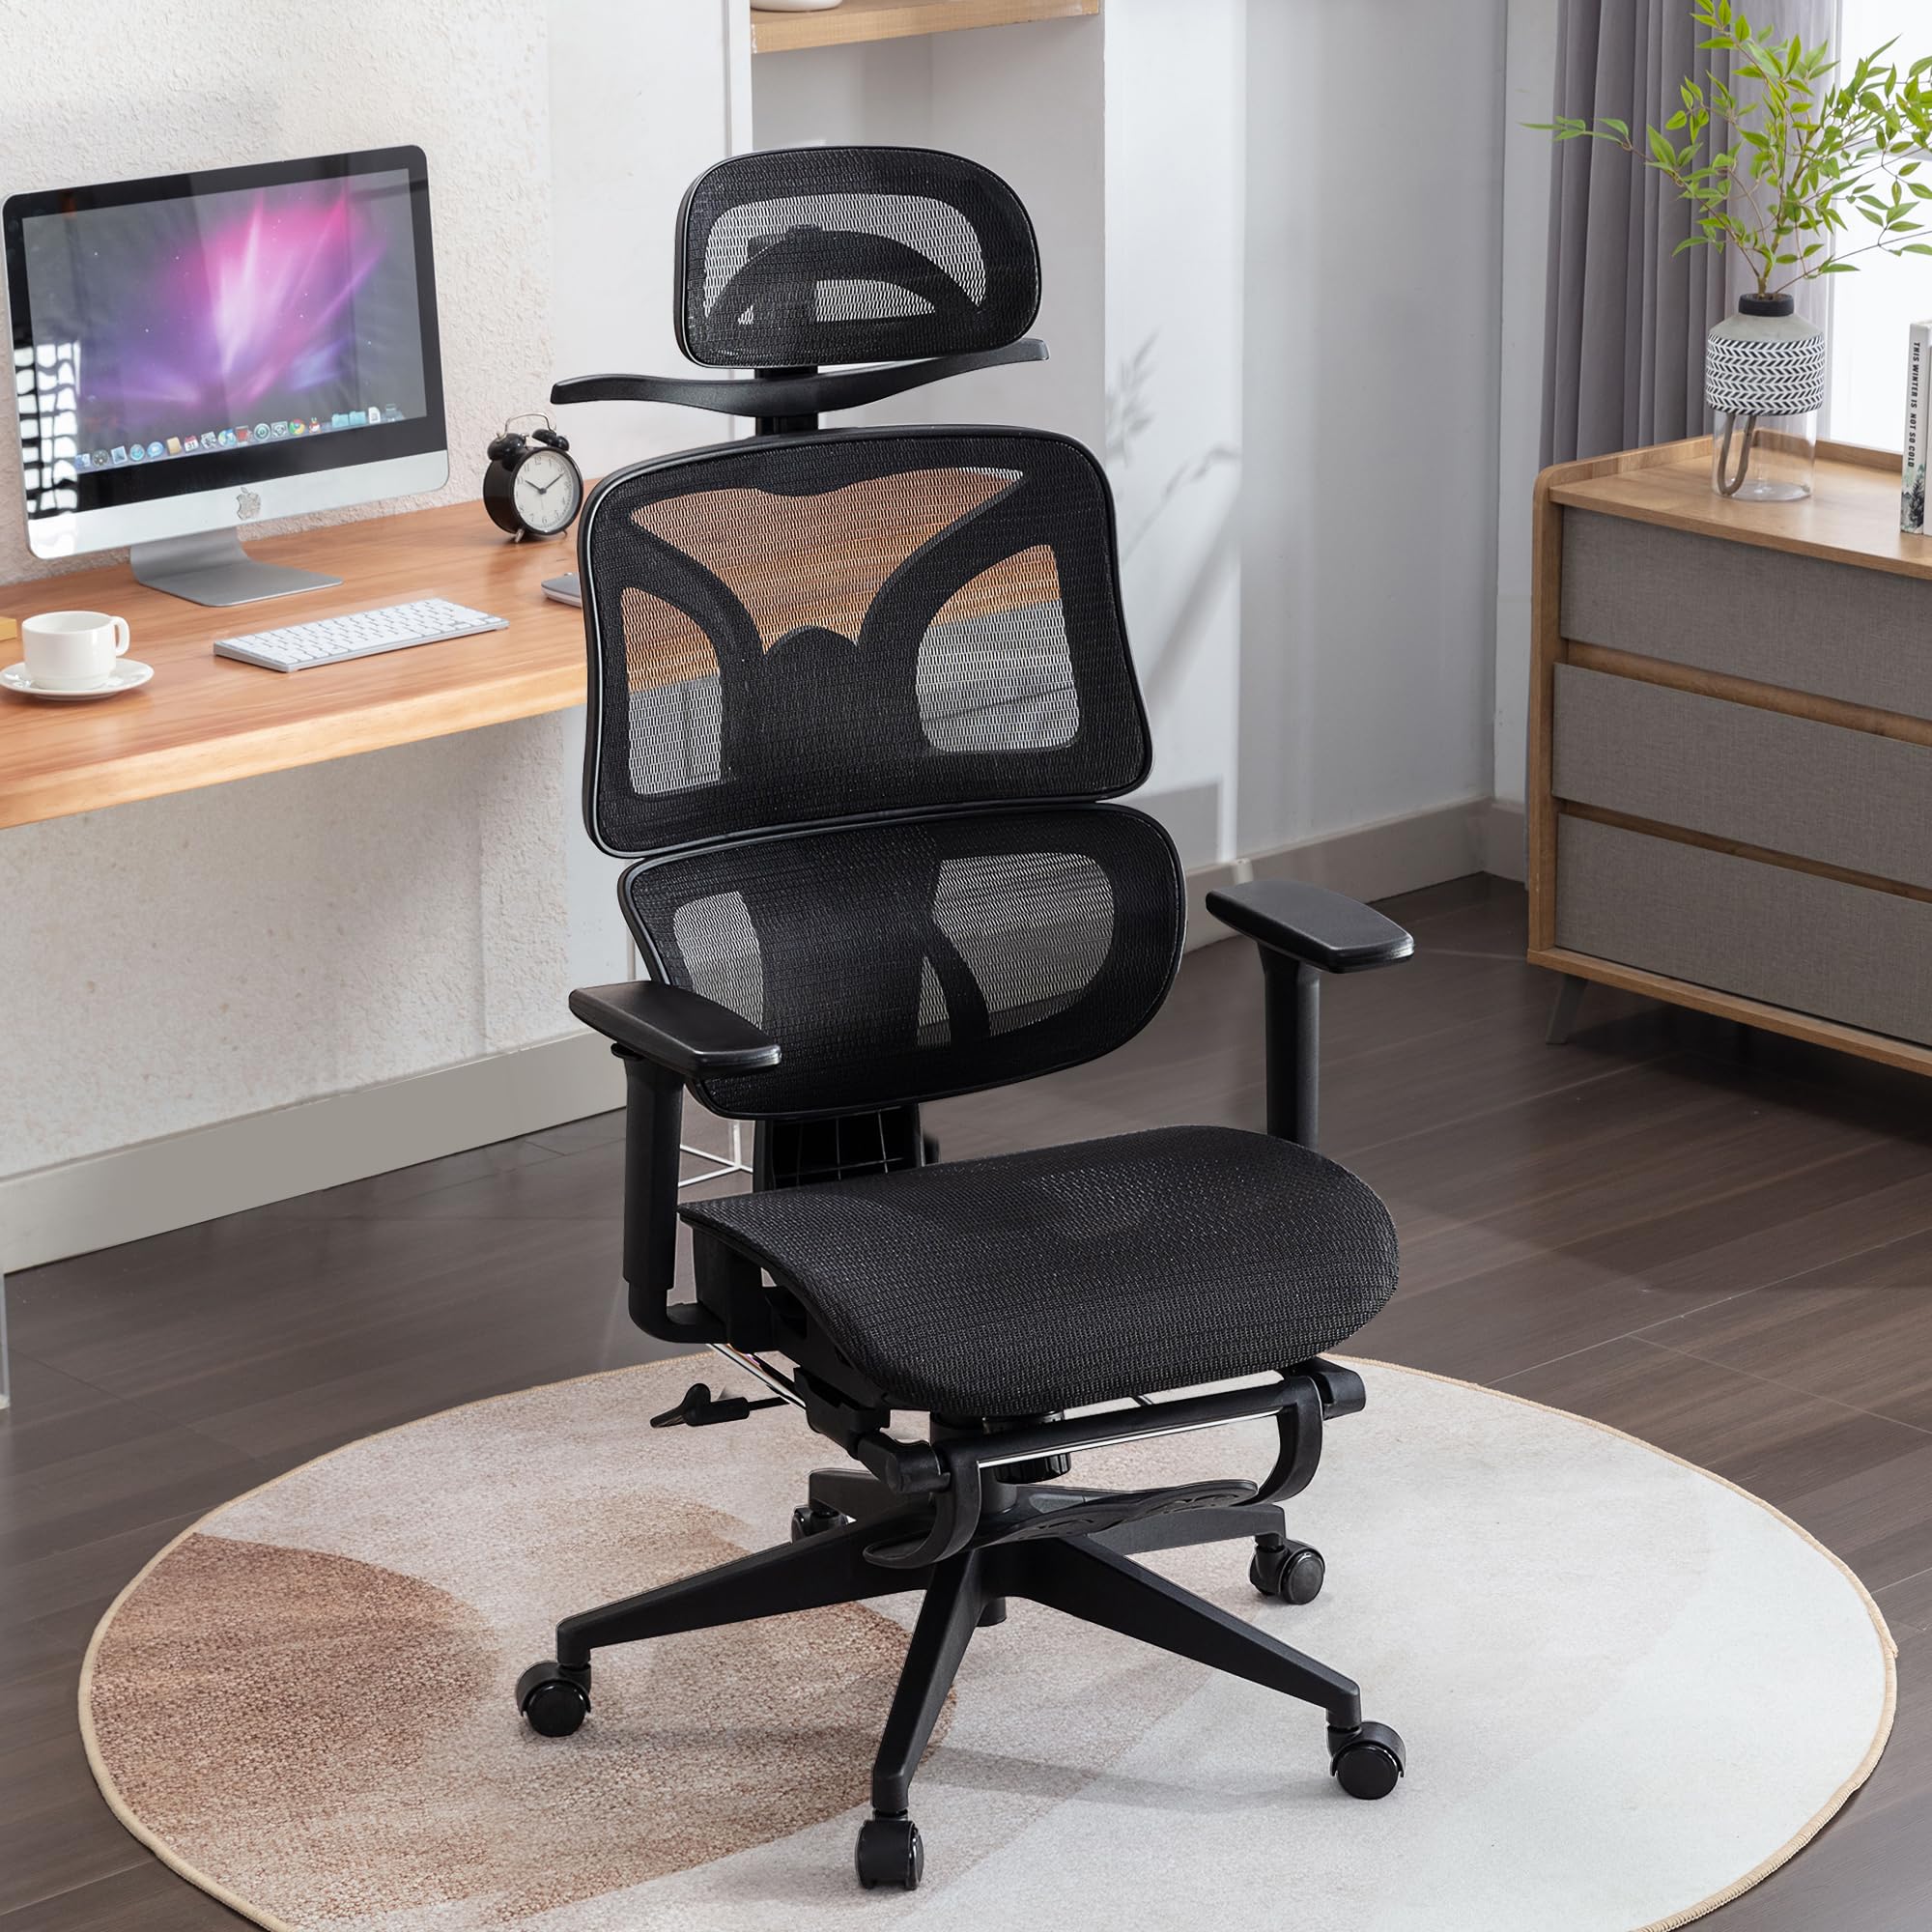 VECELO Swivel Ergonomic High Back Mesh Office Chair with Retractable Footrest, Adjustable Backrest, Tilt Function, 3D Armrests & Headrest, Lumbar Support for Executive/Computer Desk/Task Work, Black